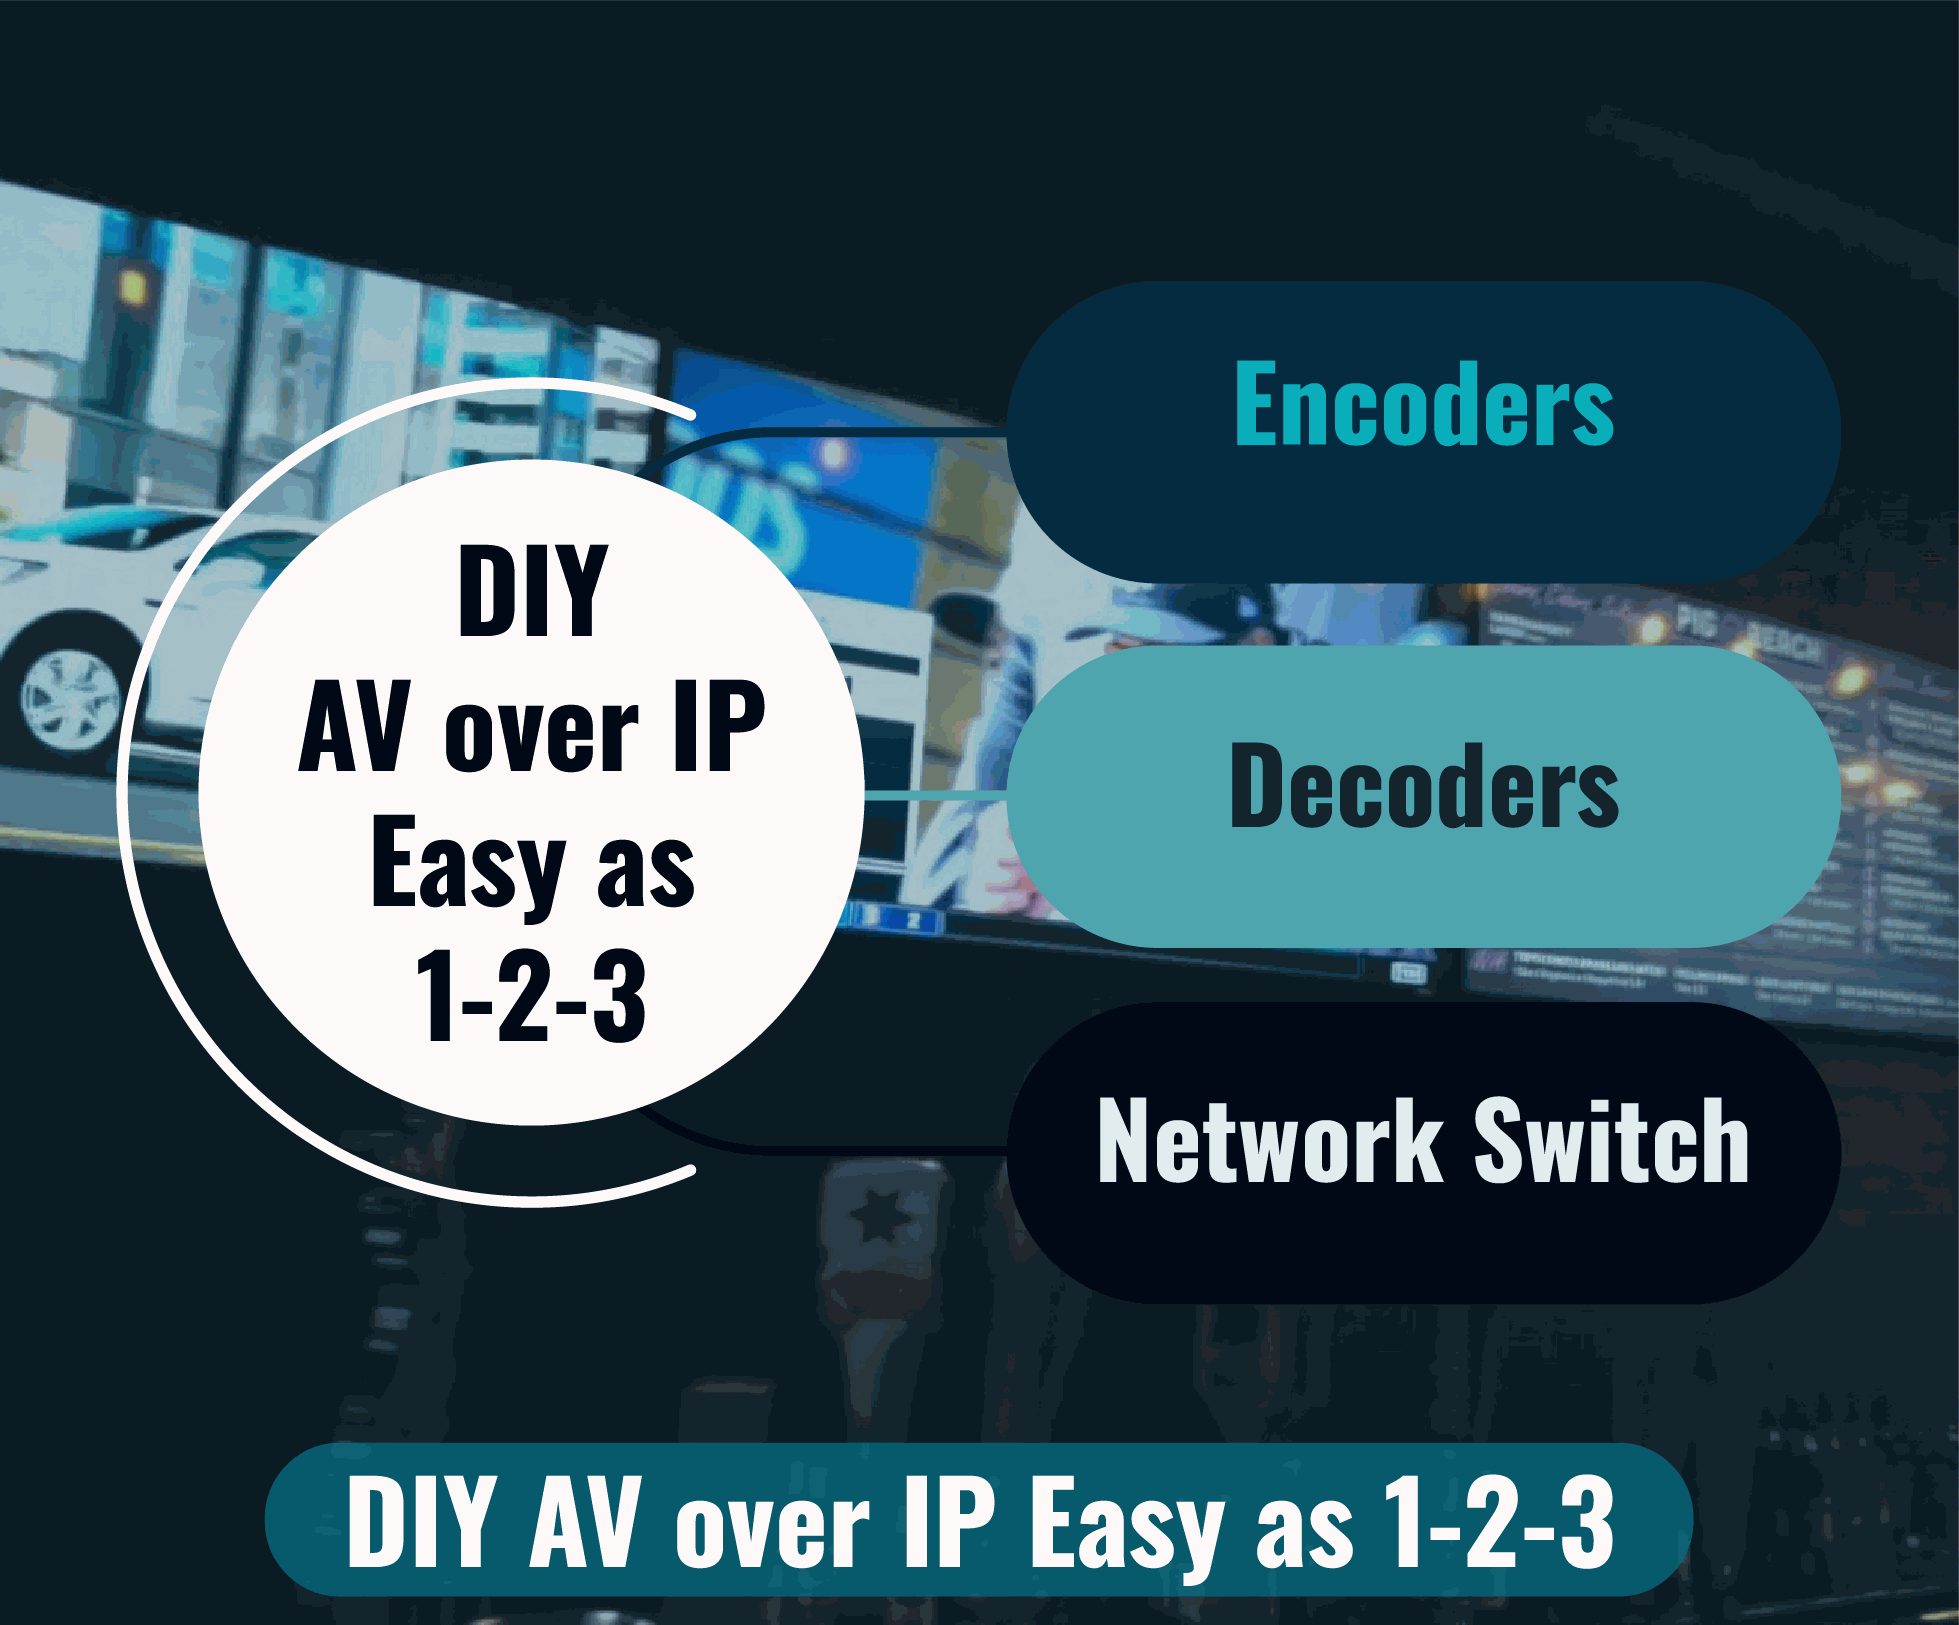 Key Digital® enables DIY AV over IP configuration with System Builder